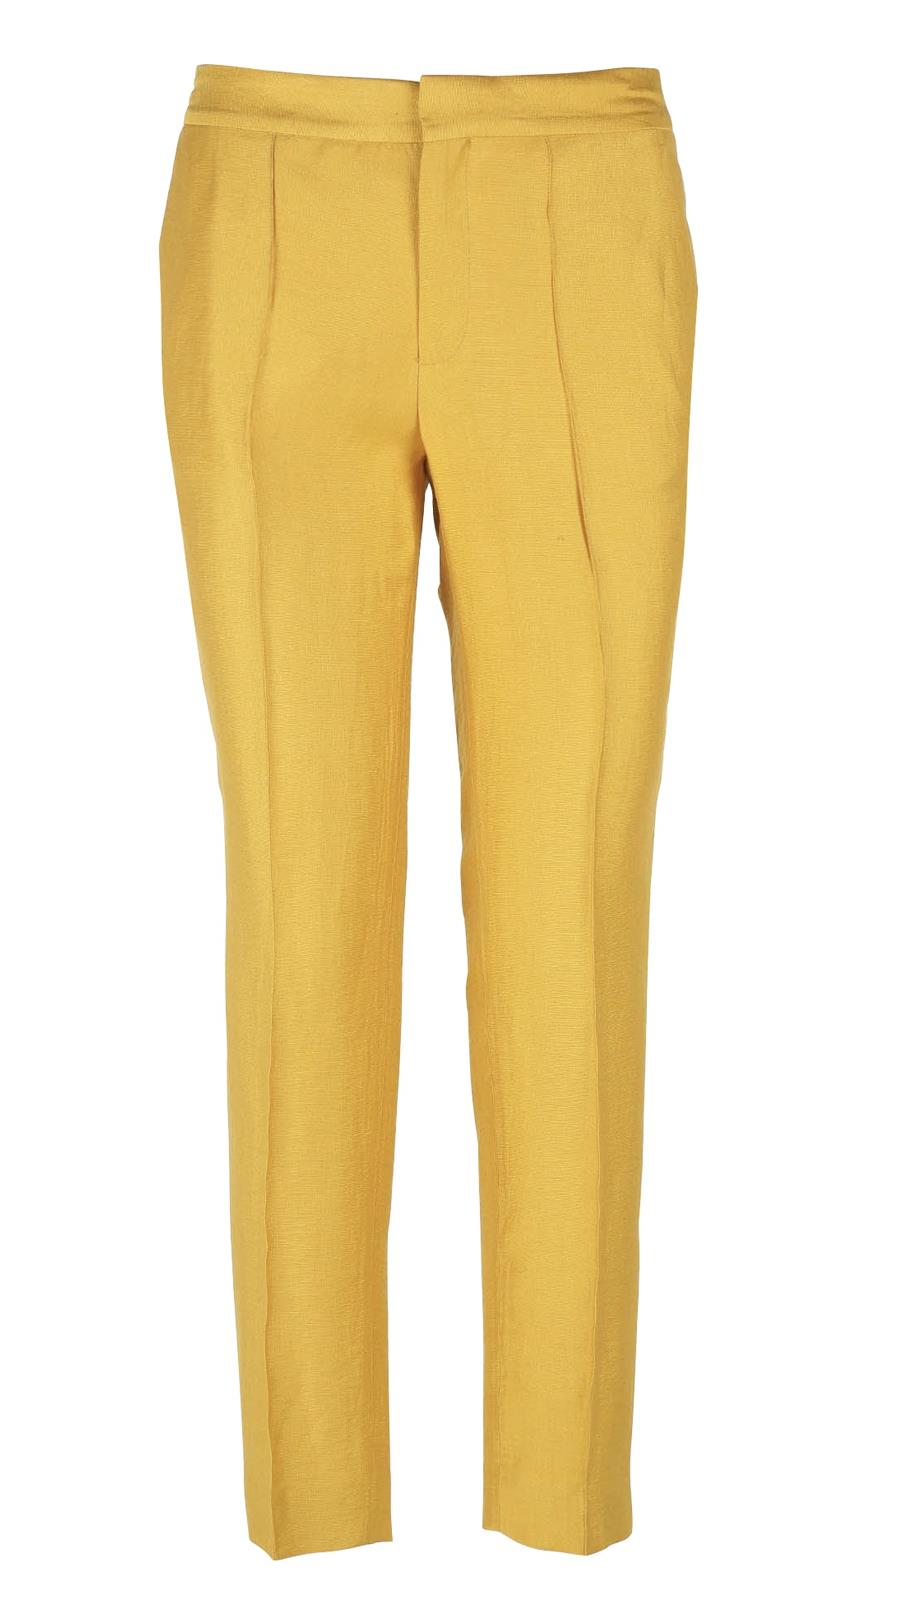 Pantalón amarillo traje mujer